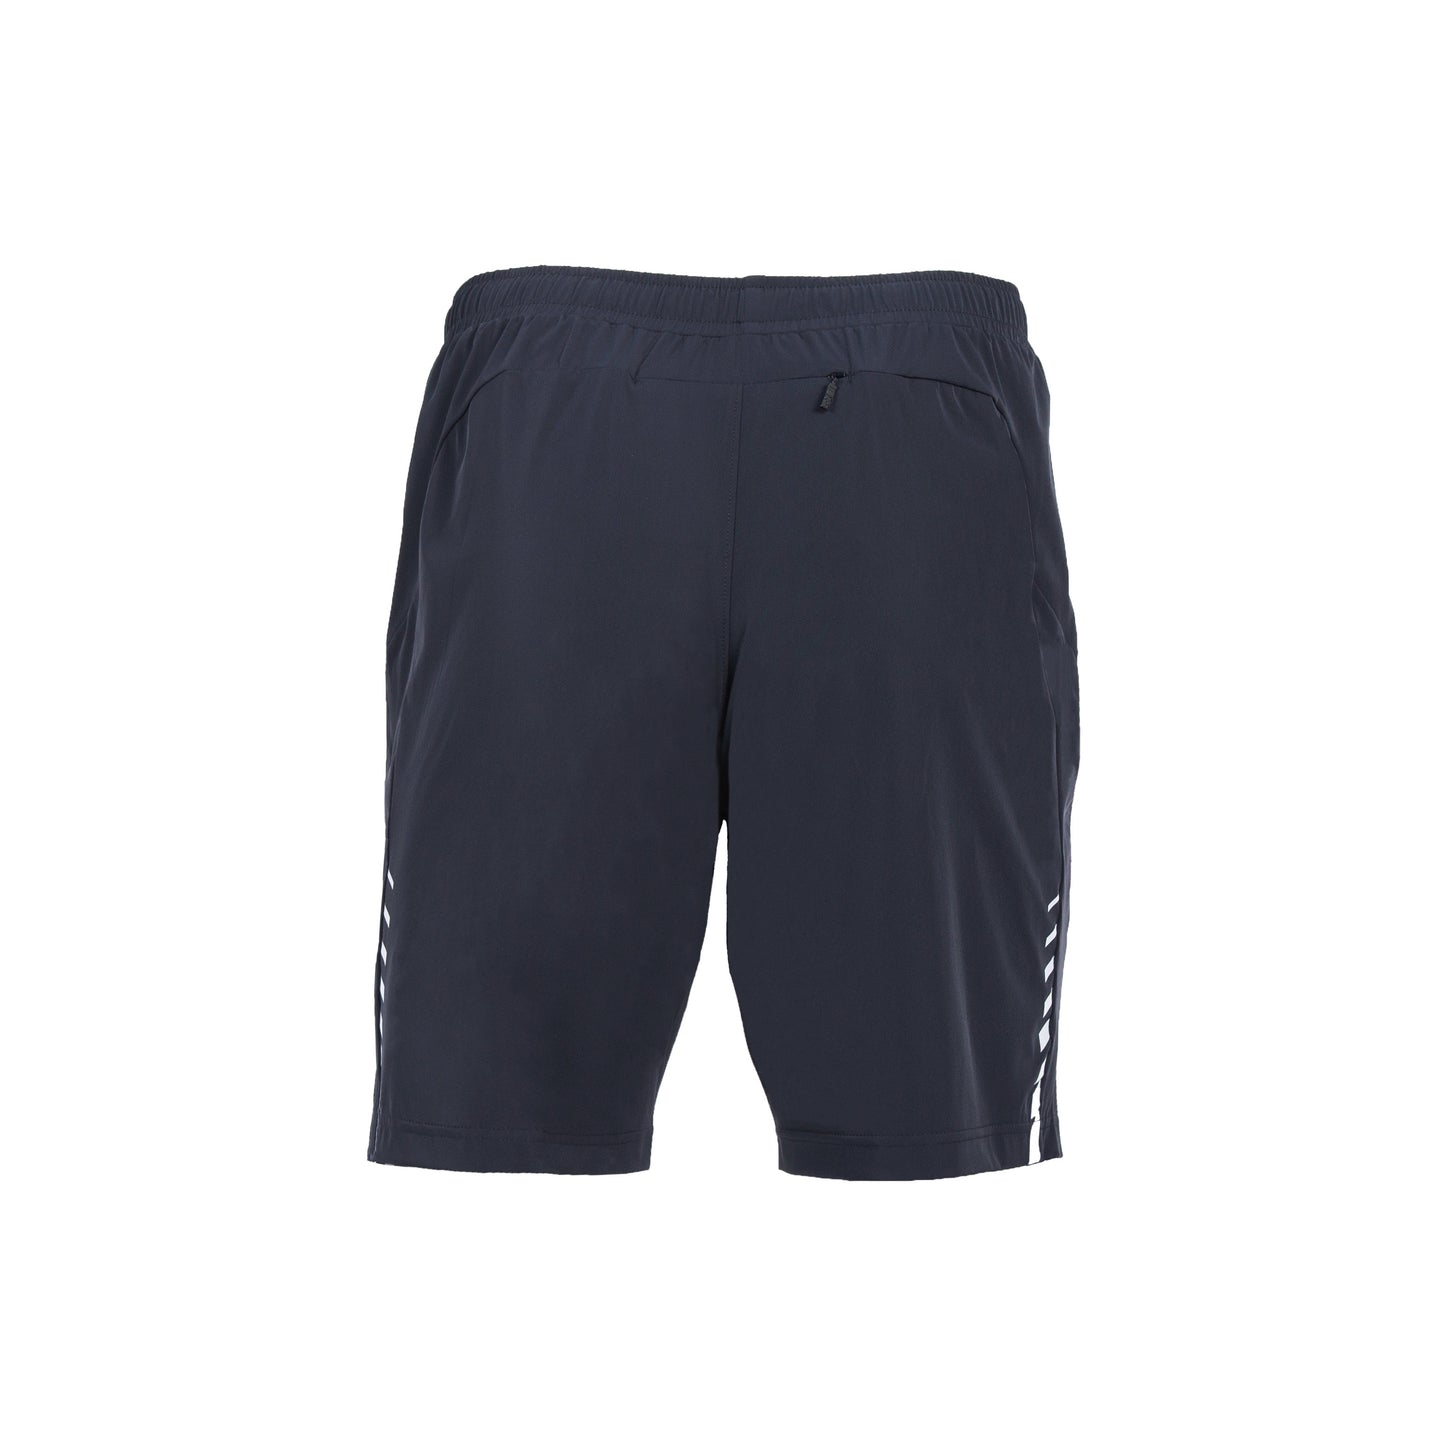 Men's Apex Sport Shorts - Black